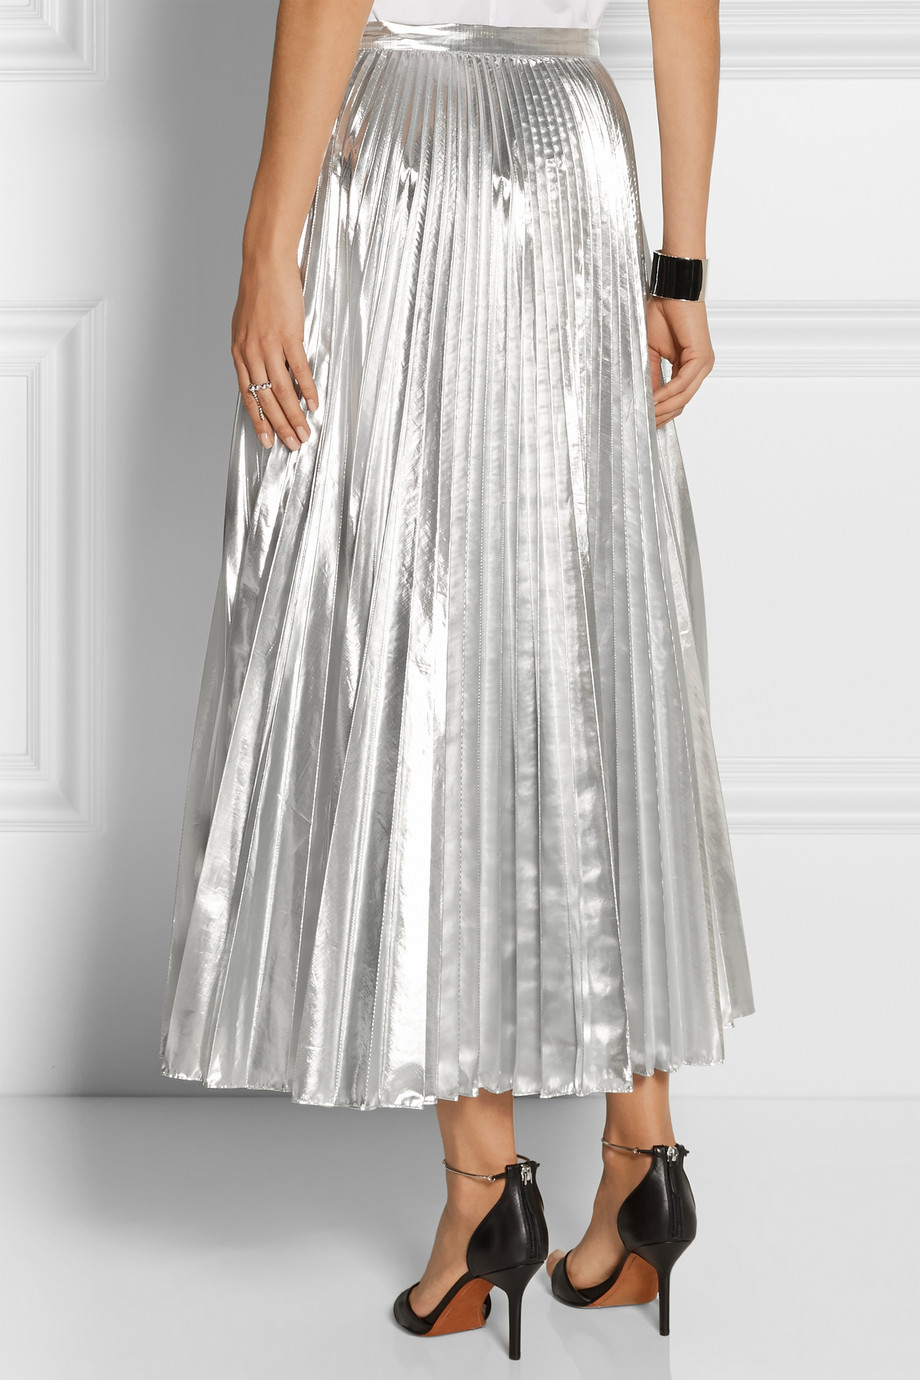 Lyst - Dkny Pleated Metallic Taffeta Midi Skirt in Metallic